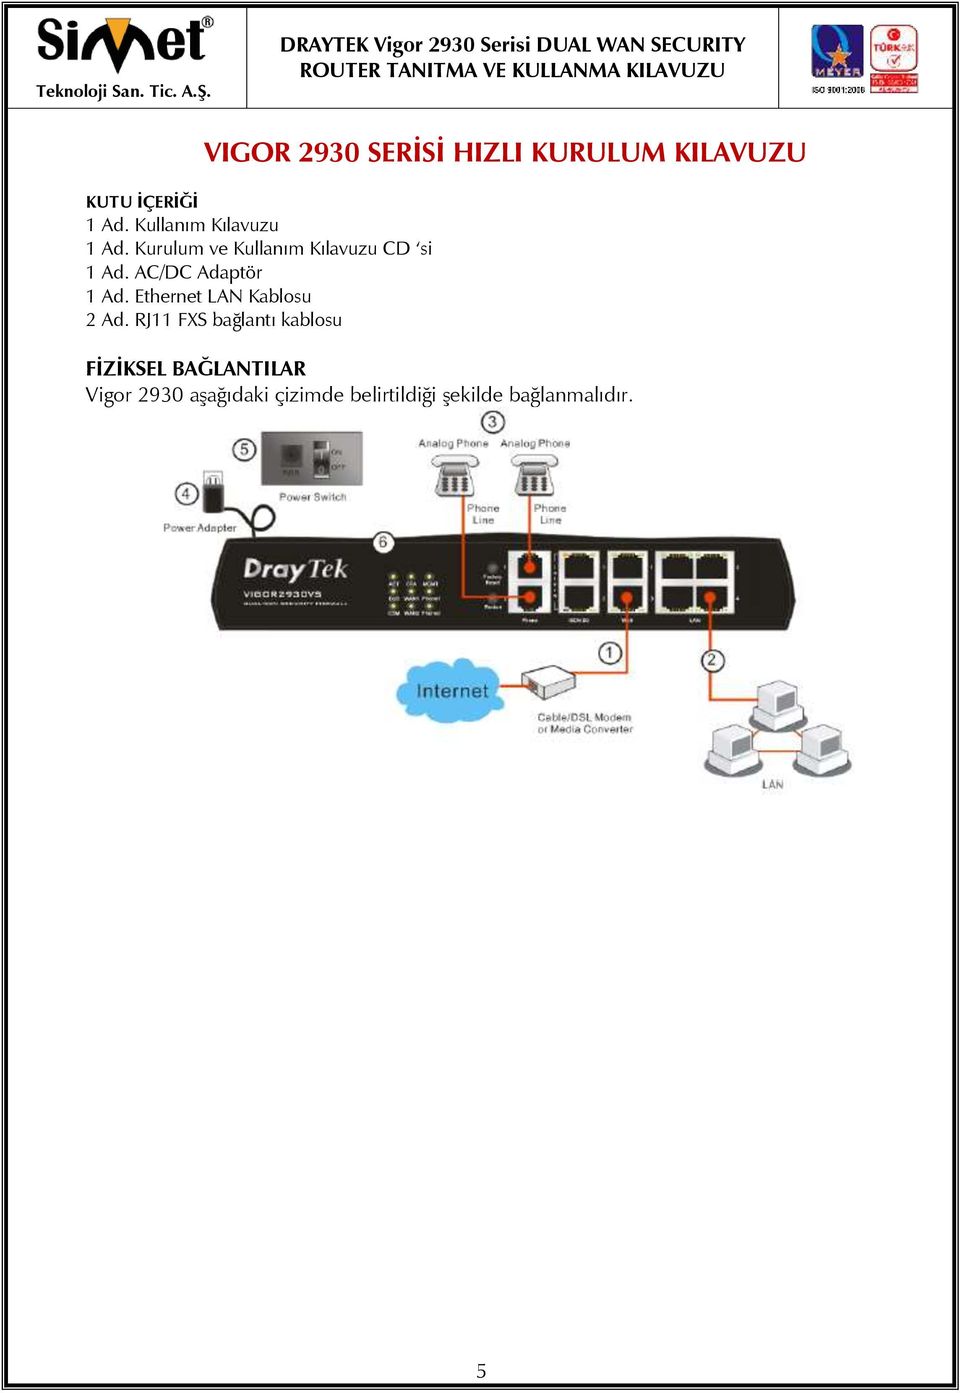 AC/DC Adaptör 1 Ad. Ethernet LAN Kablosu 2 Ad.